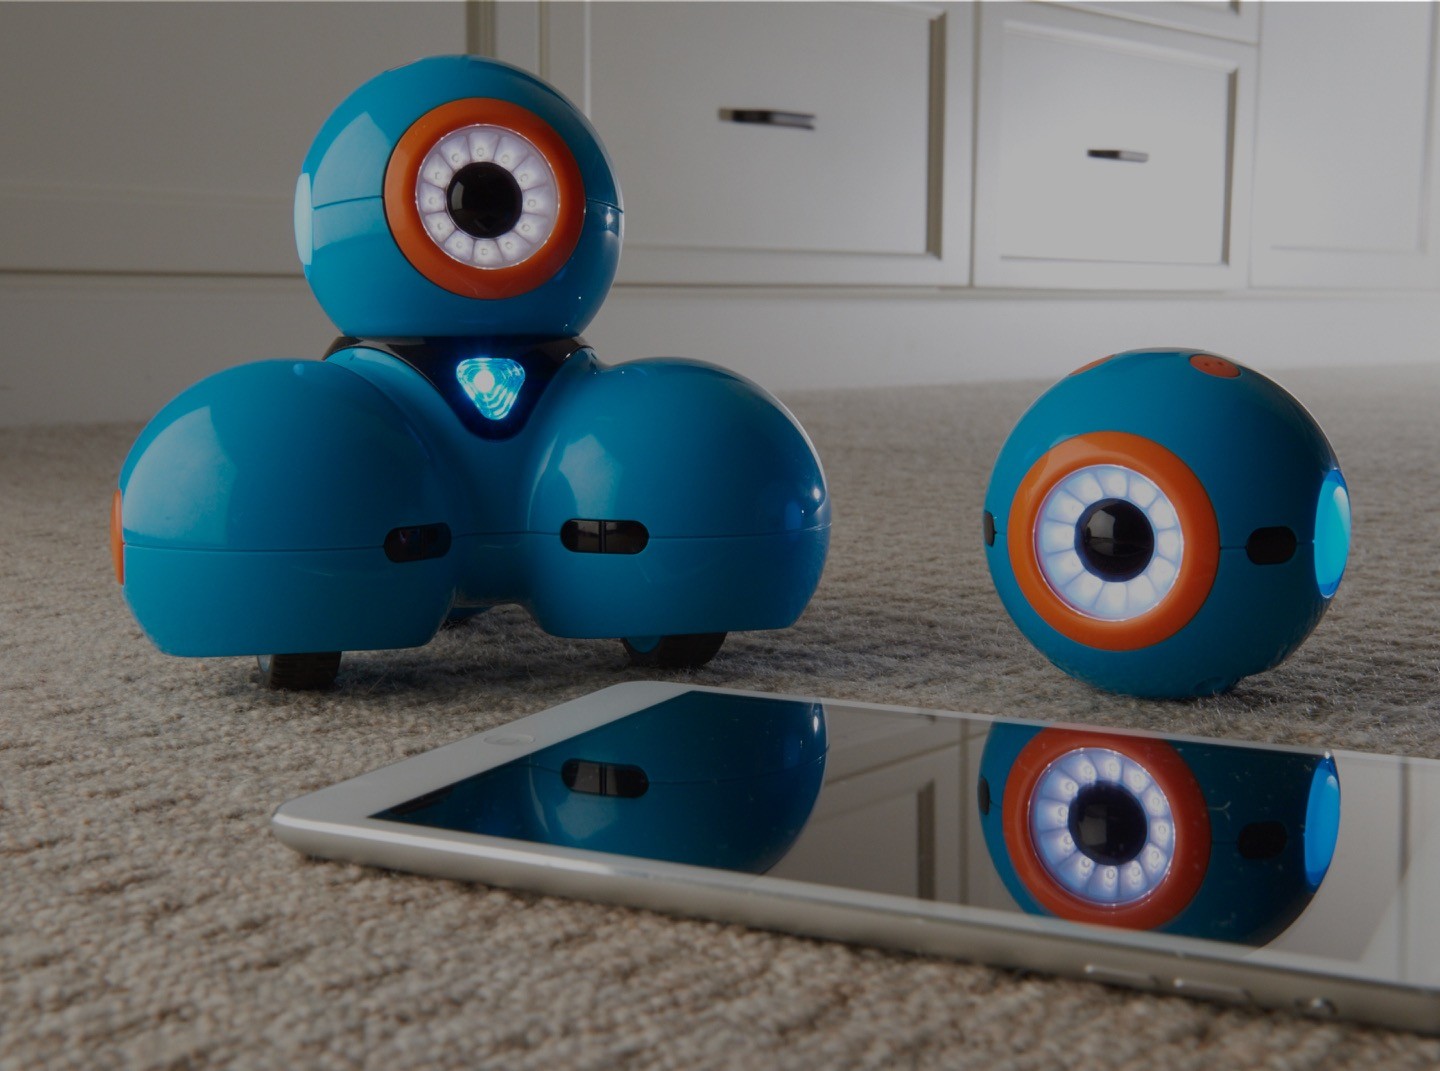 Wonder Workshop, maker of Dash & Bot robots, raised $20 million Series B funding